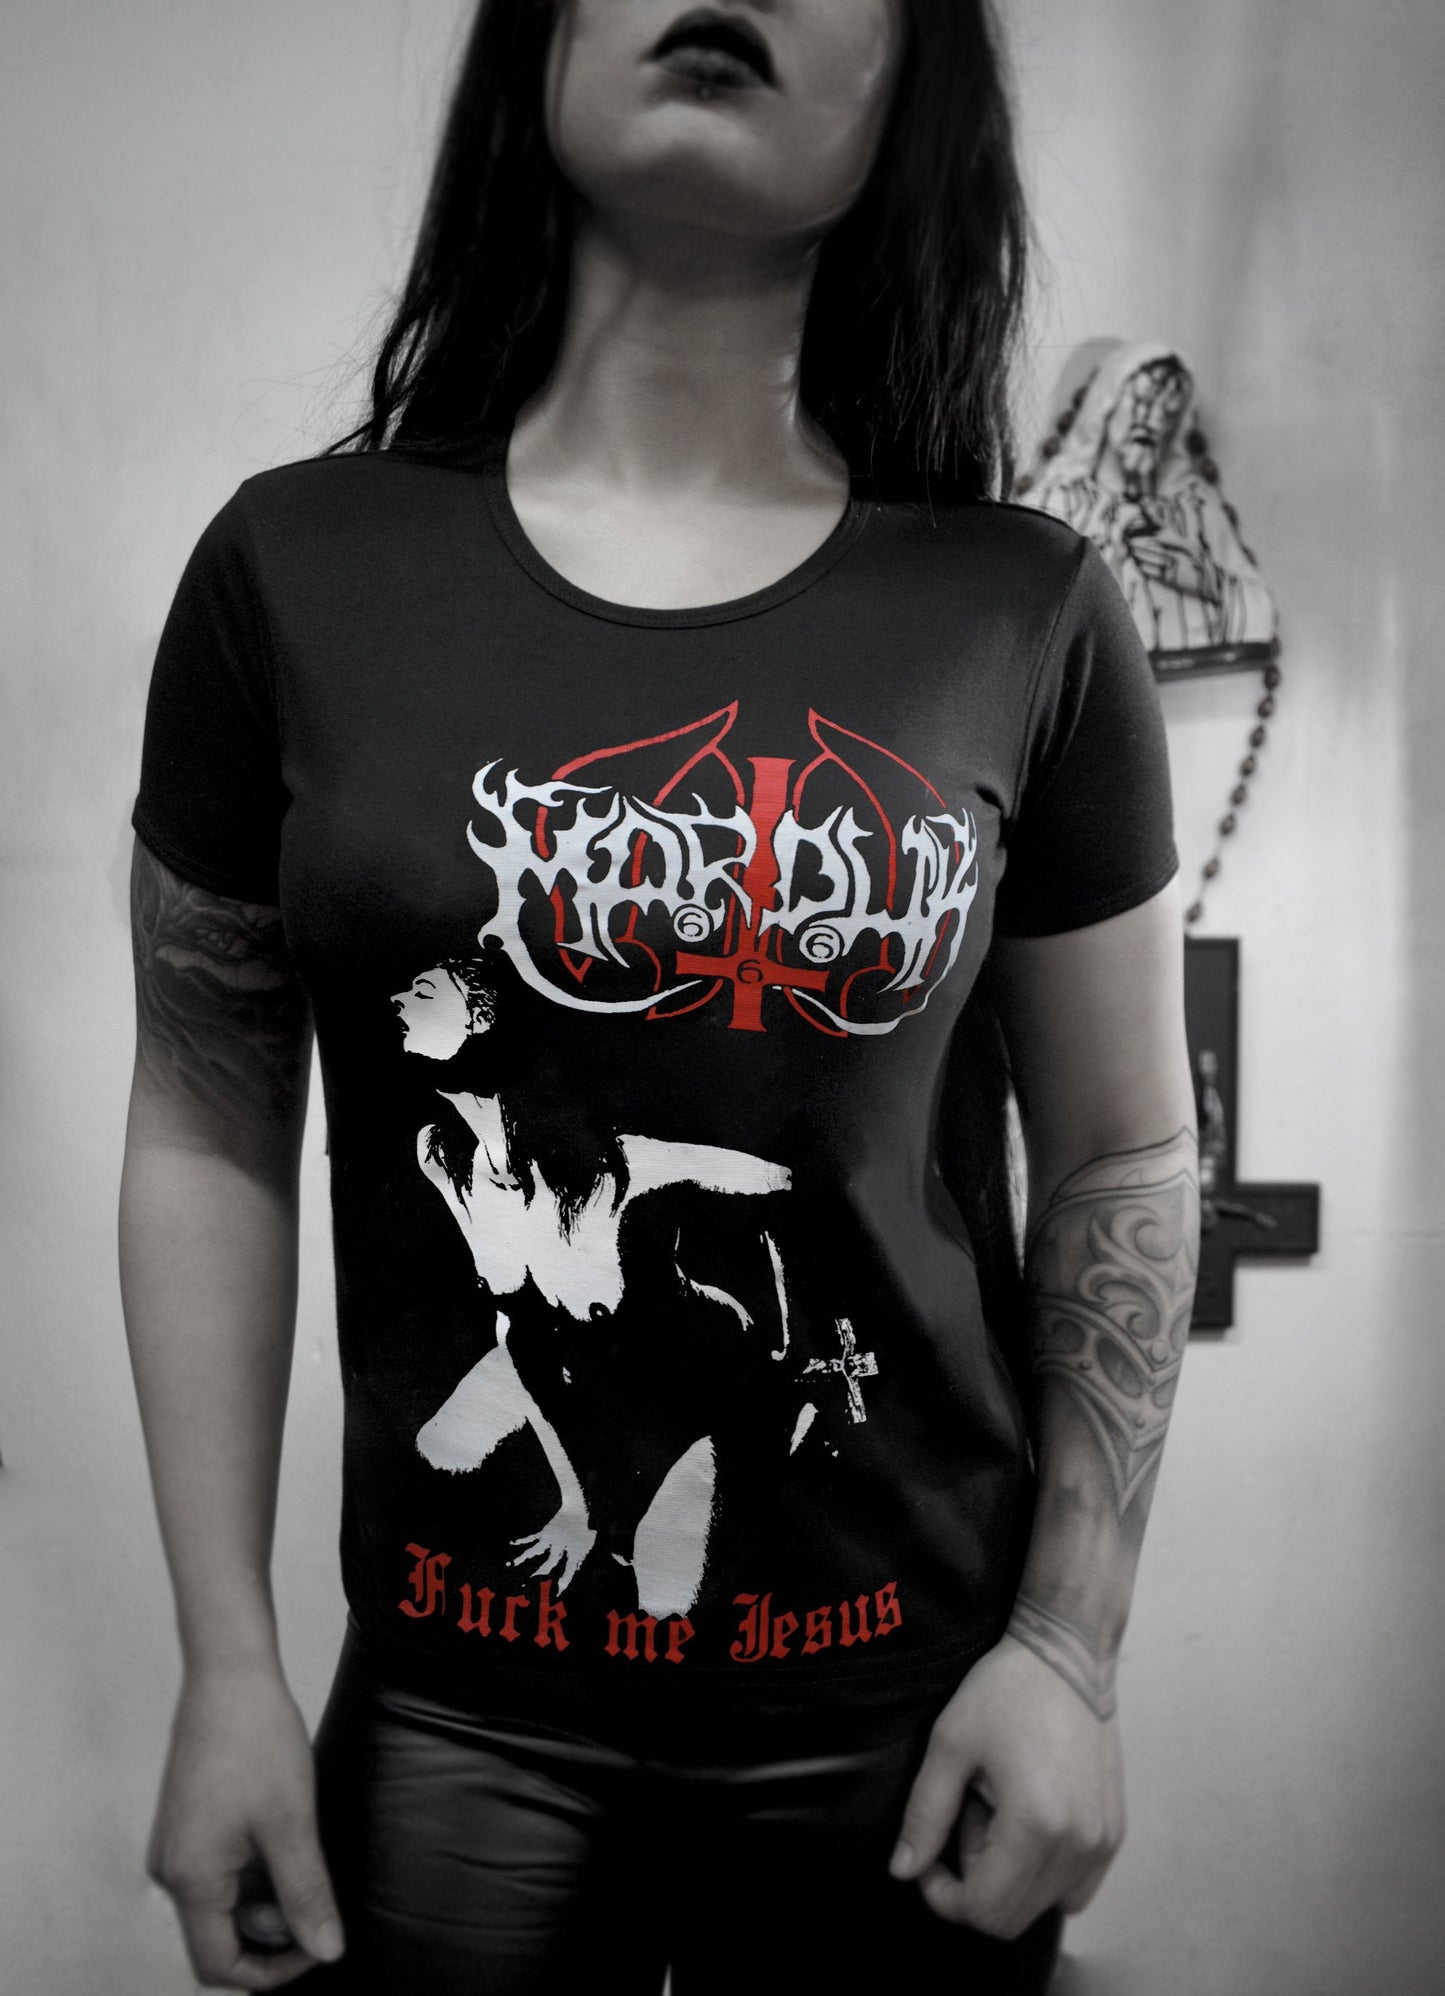 Marduk Fuck me Jesus t shirt ⇹ black metal tee ⇹ Marduk black metal shirt